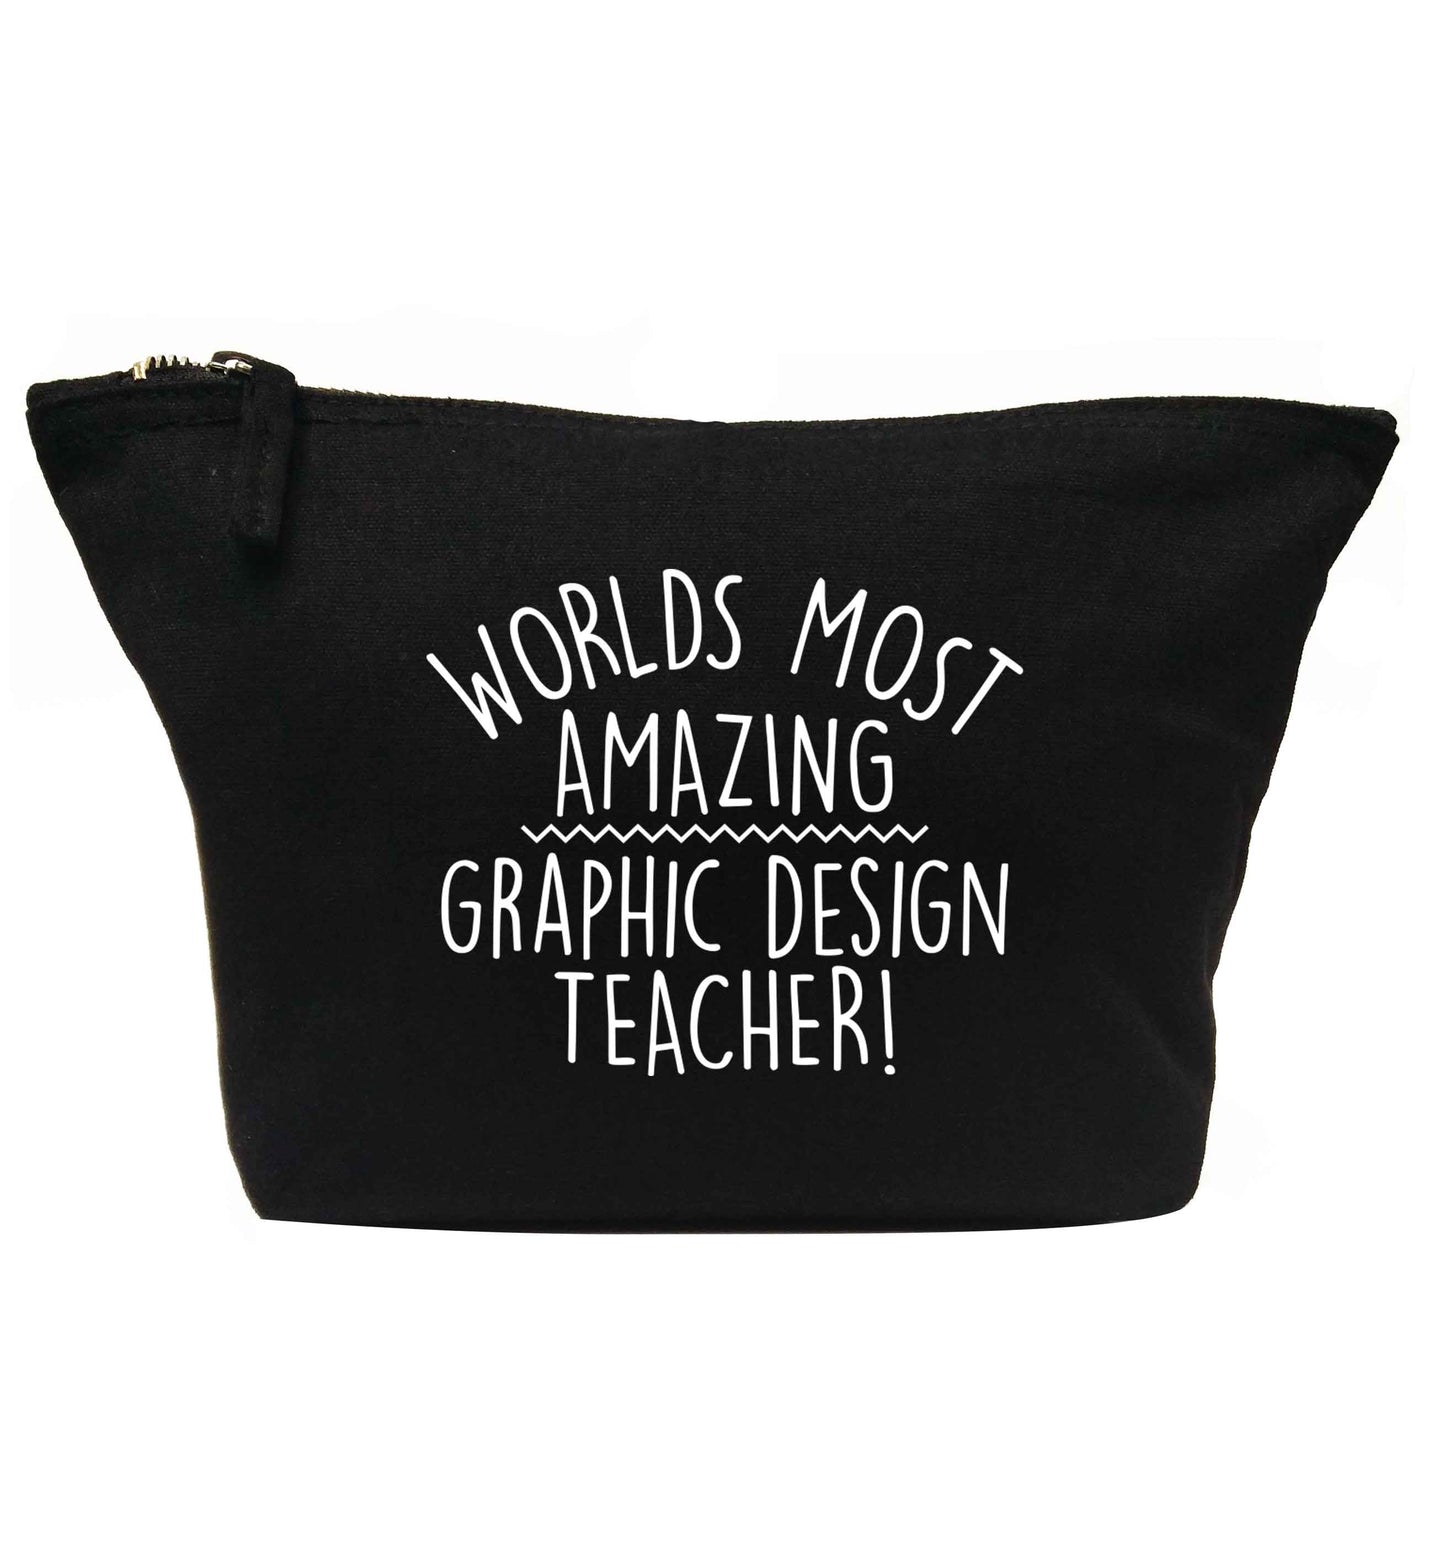 Worlds most amazing graphic design teacher | Makeup / wash bag